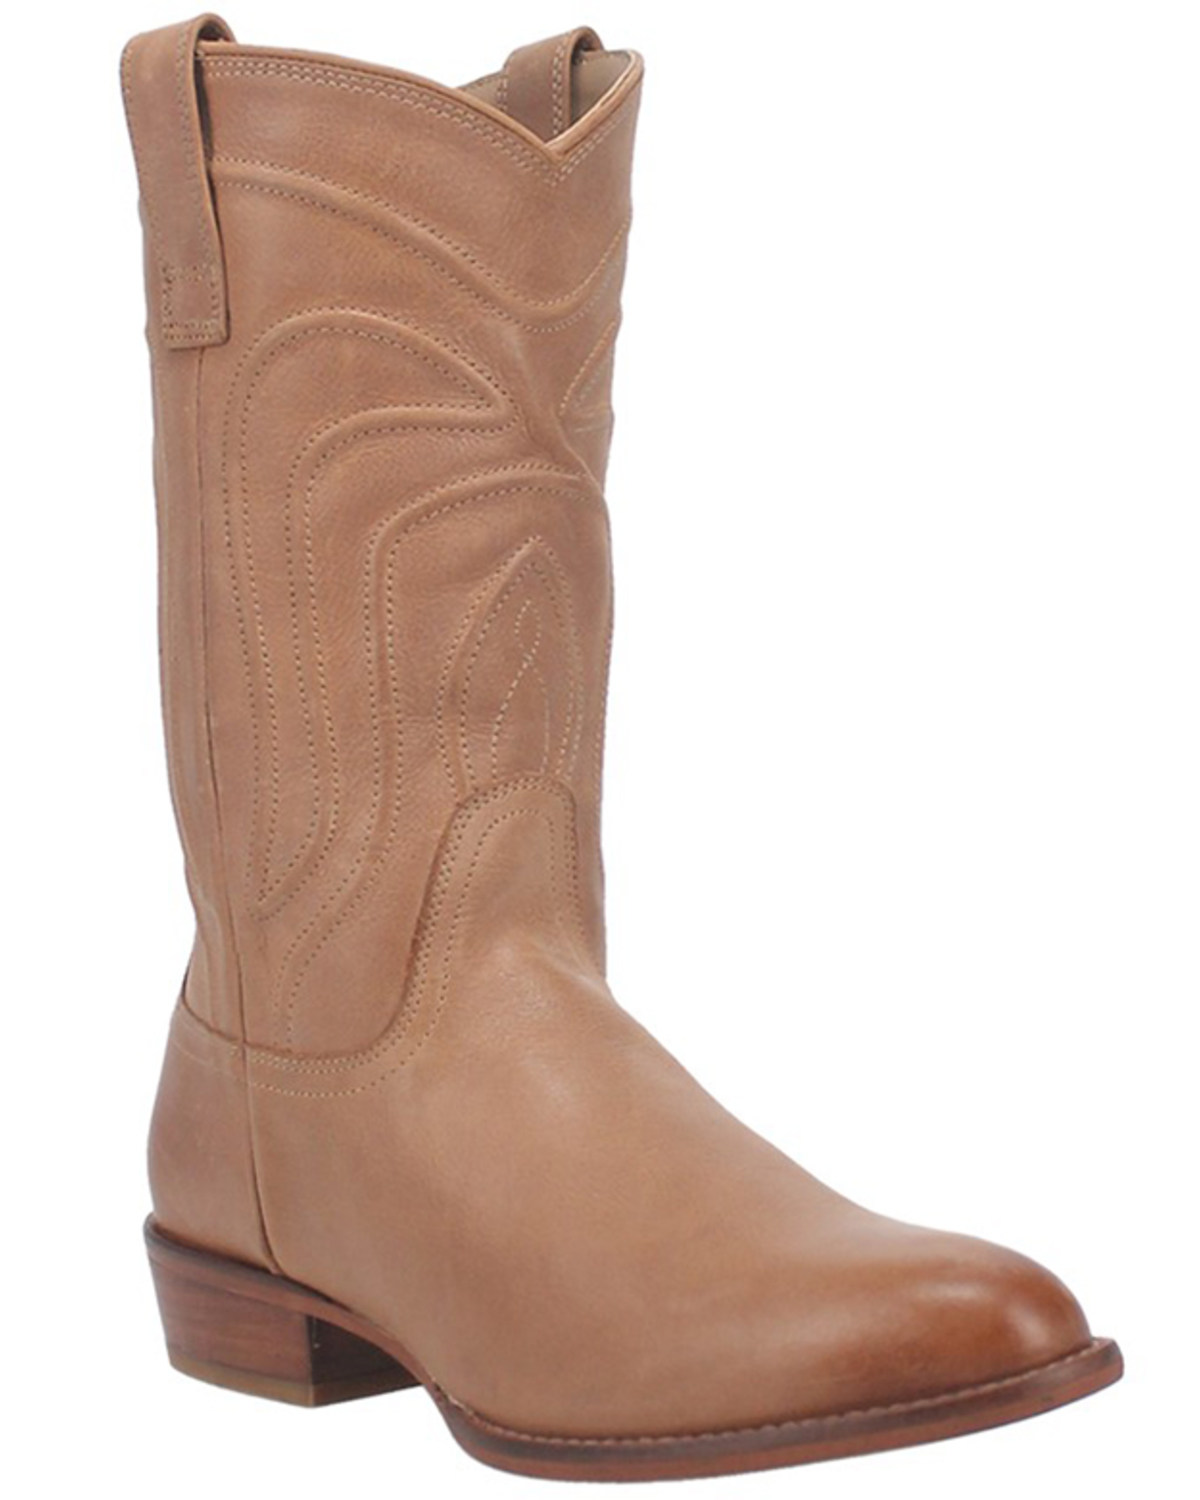 Dingo Men's Montana Western Boots - Almond Toe